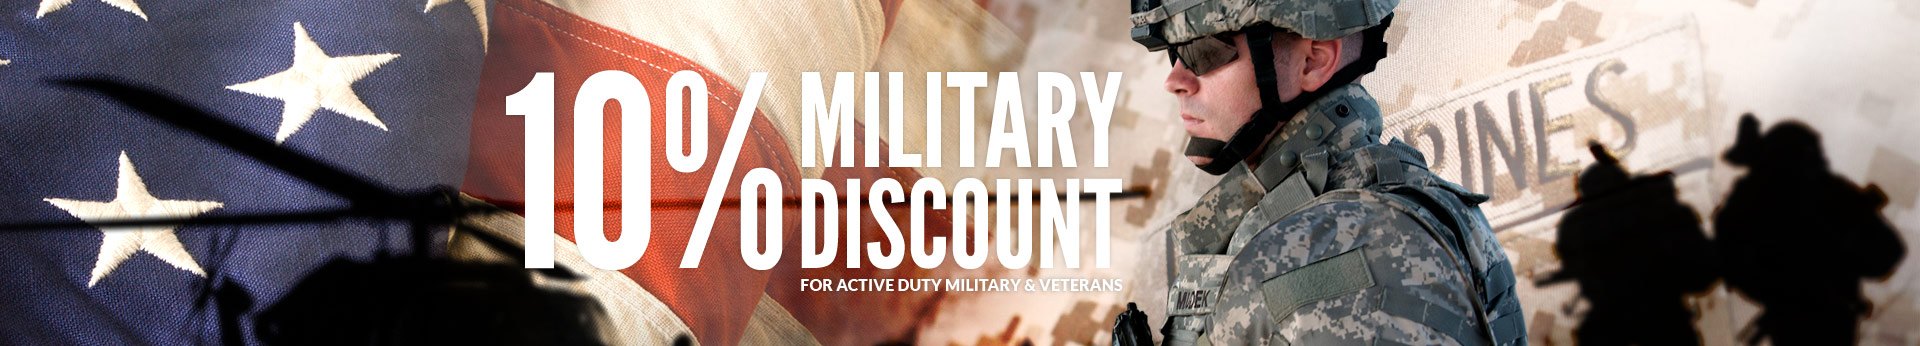 Military Discounts on Auto Accessories & Parts at JMAutoSports.com